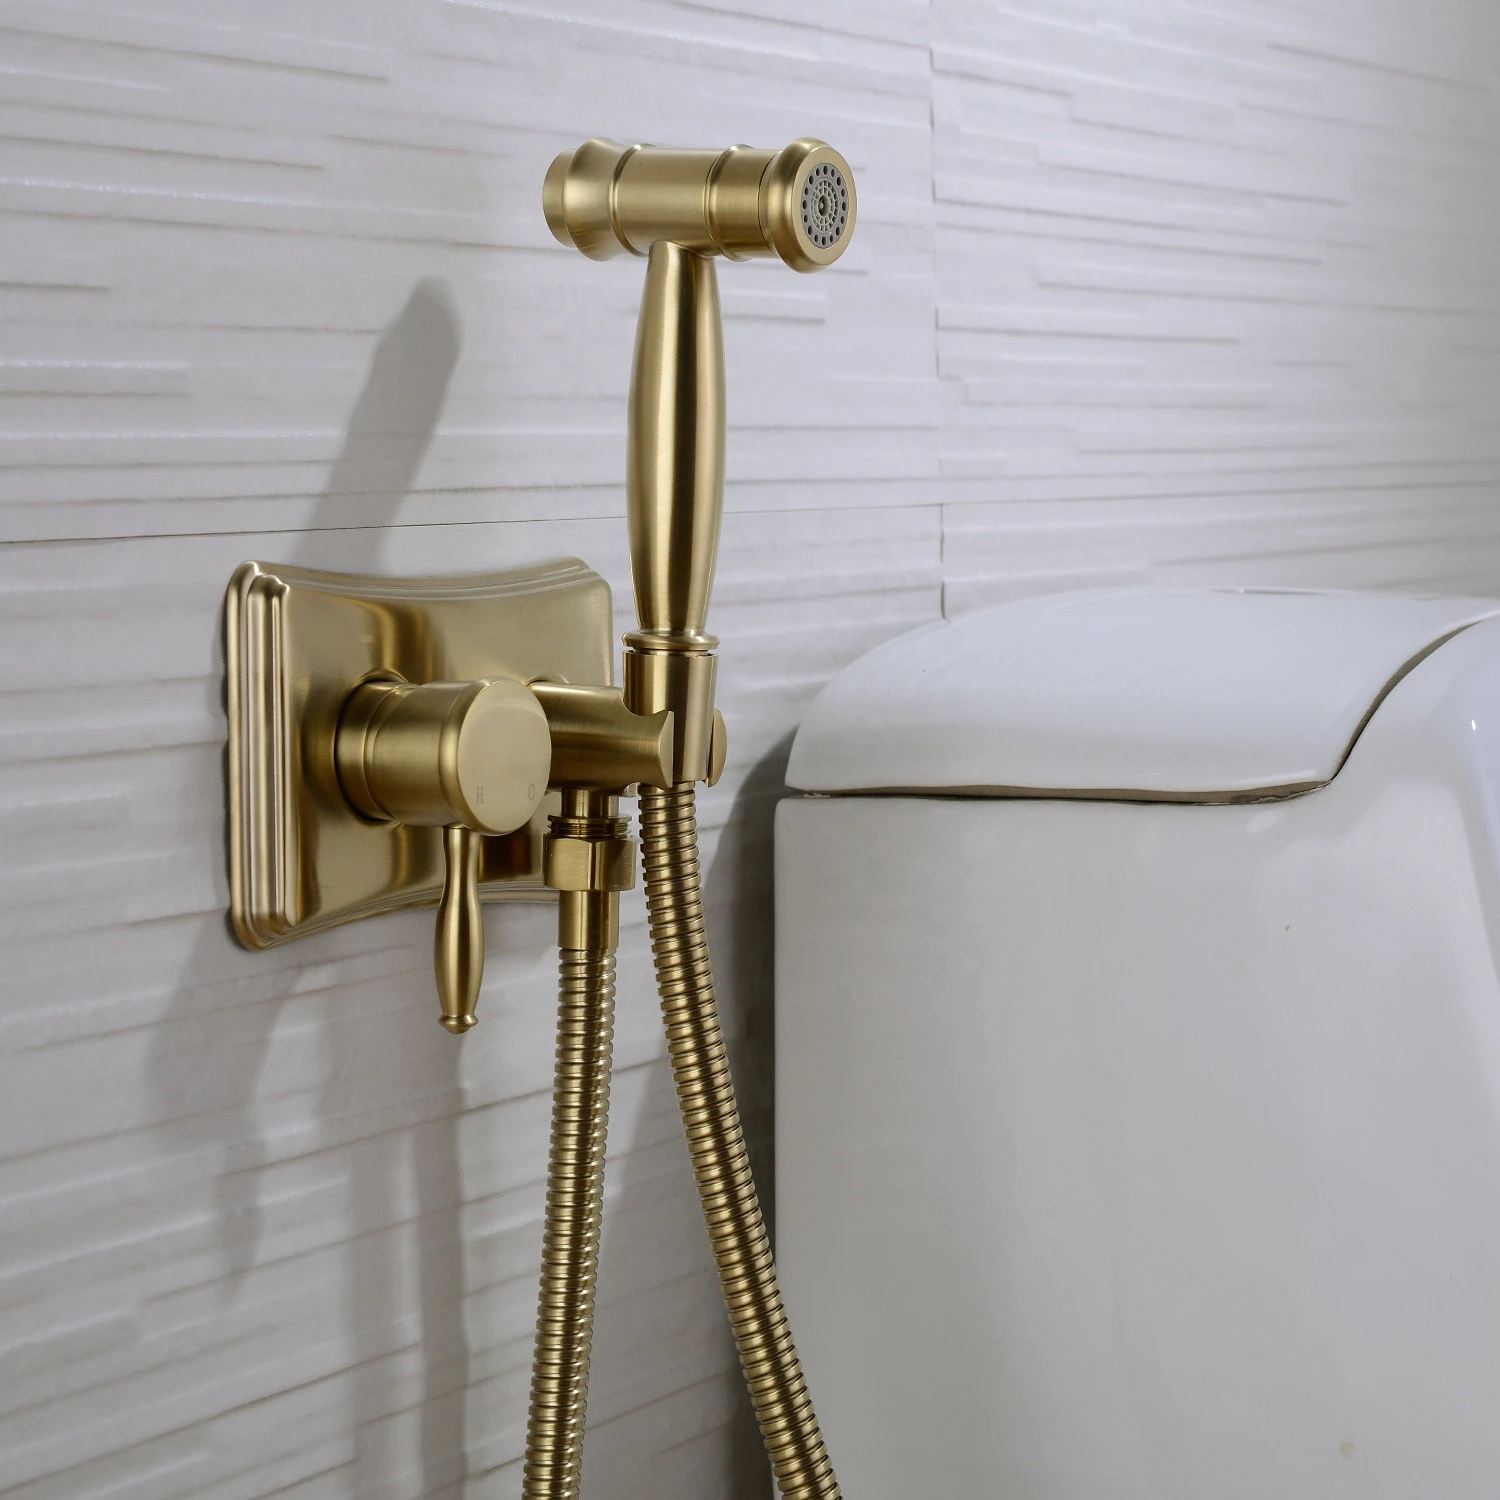 Brass Toilet Hot Cold Handheld Bidet Diaper Set Bathroom Shower Set Shattaf Sprayer Jet Douche Kit Bidet Spray